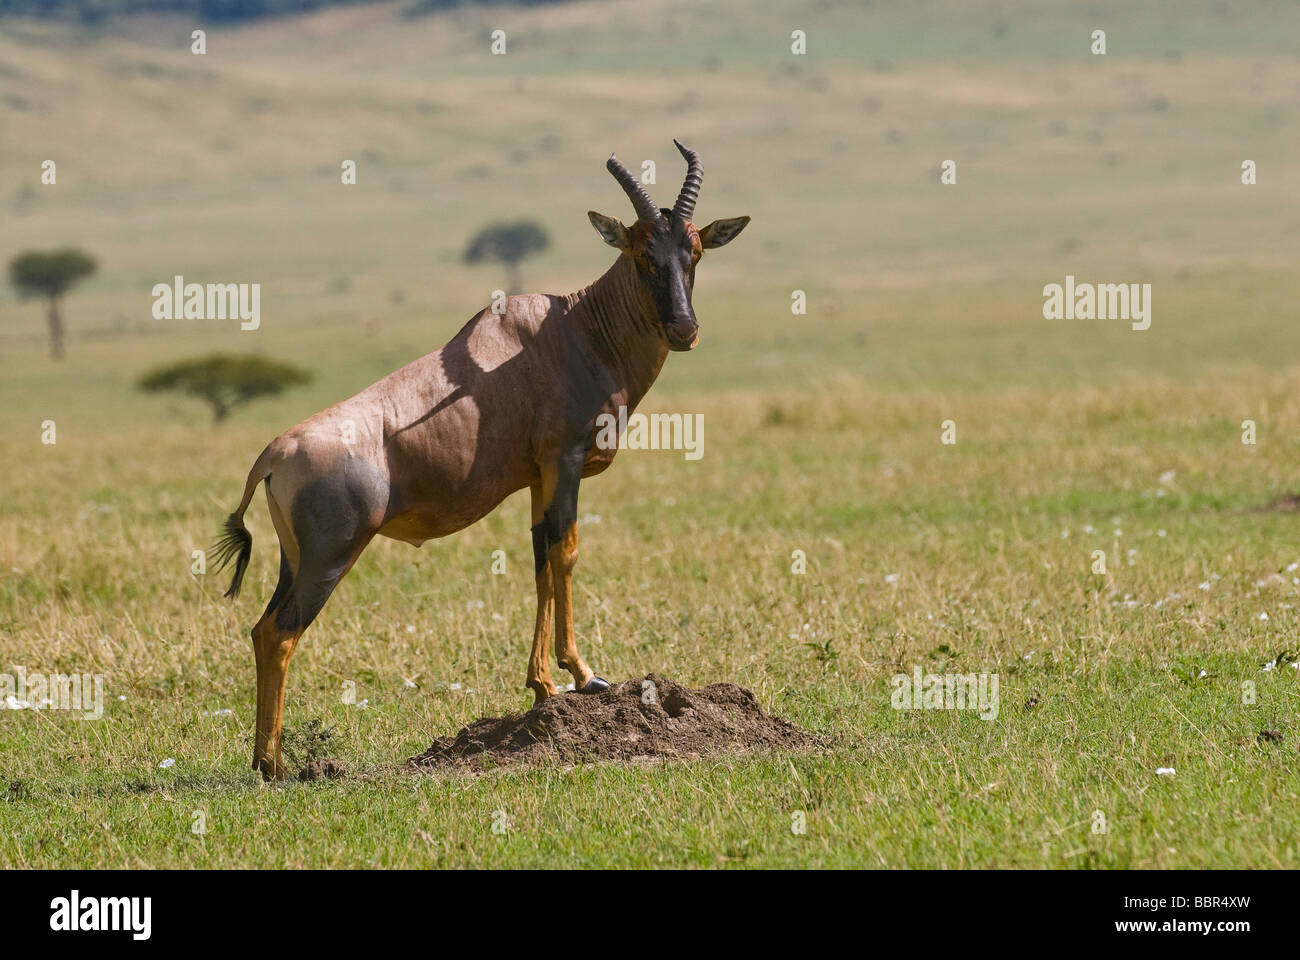 Topi Damaliscus lunatus Masai Mara NATIONAL RESERVE KENYA East Africa Stock Photo